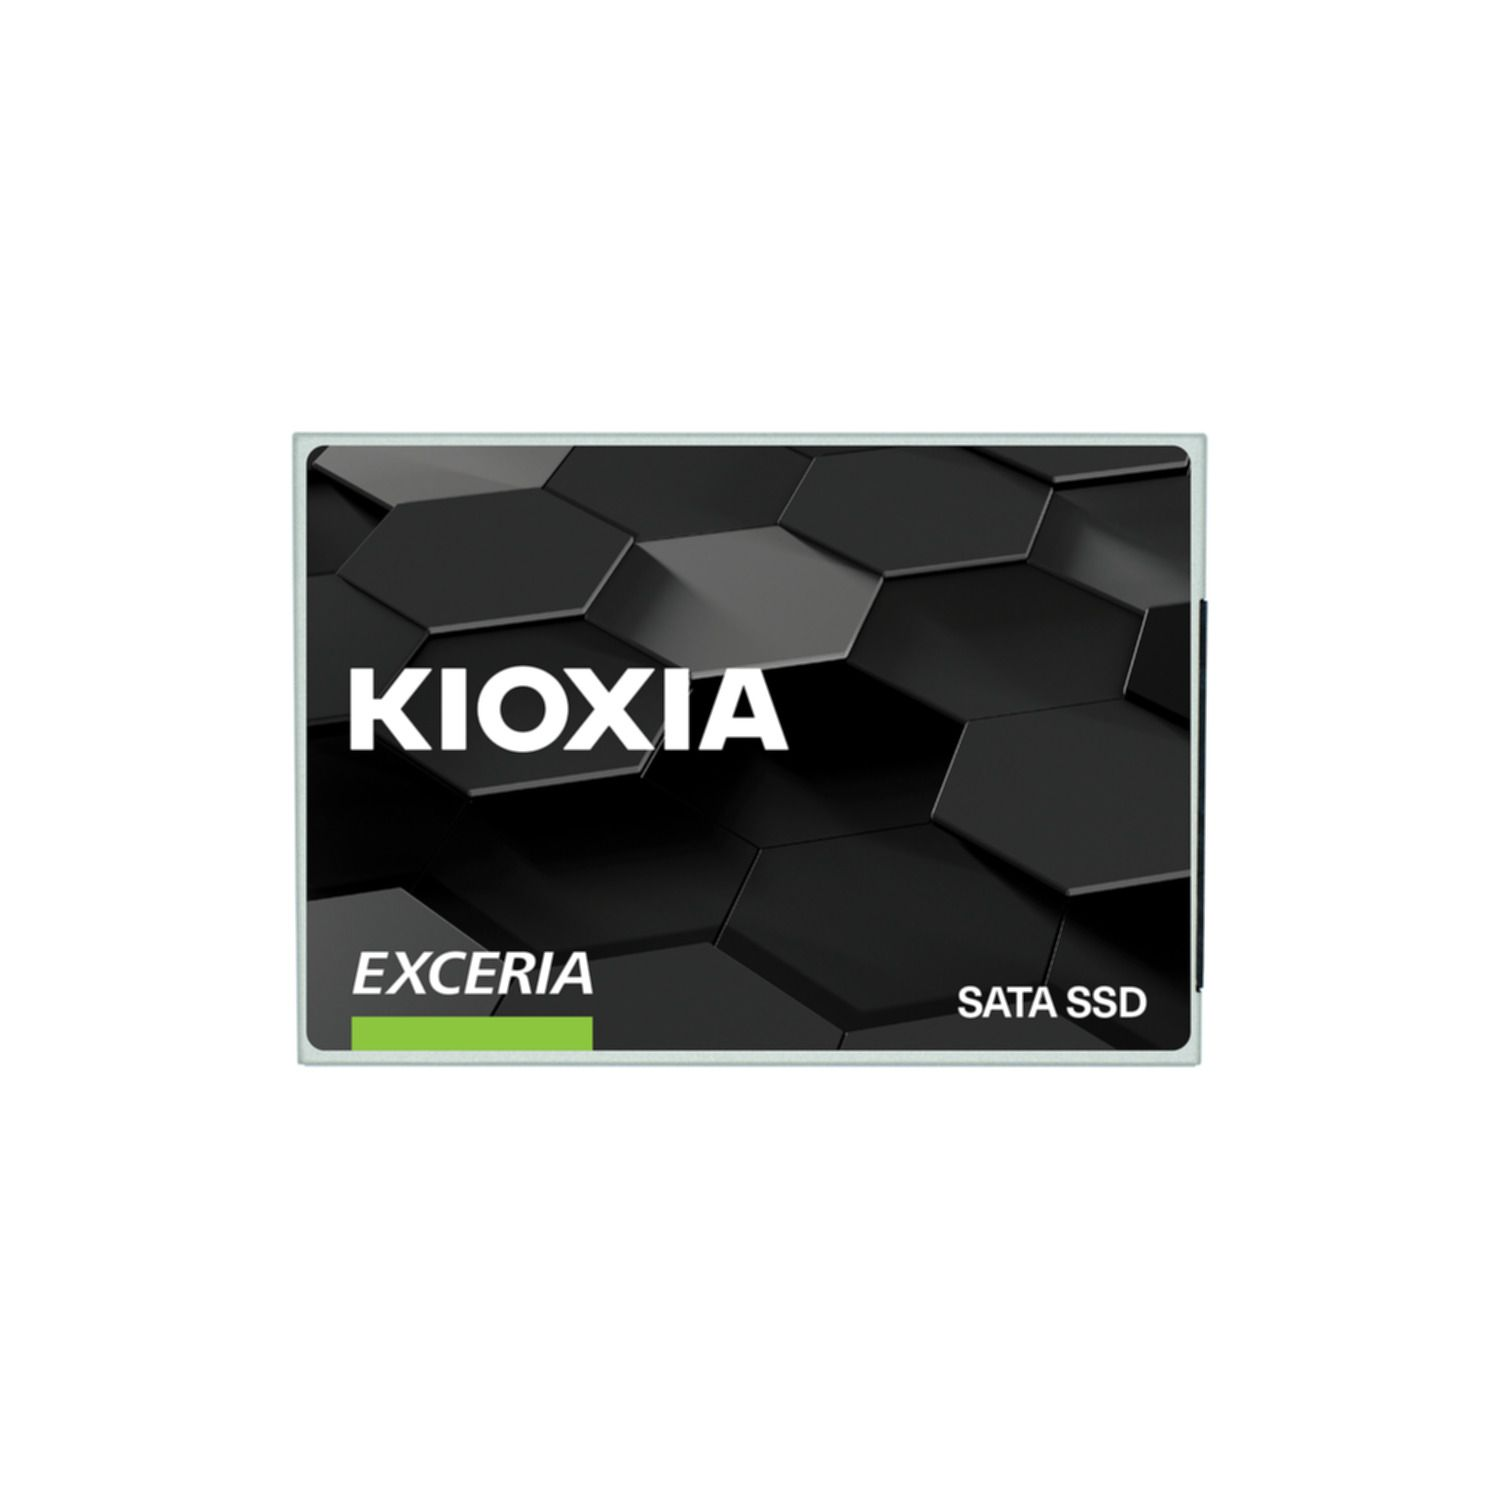 intern 960 GB, SSD, EXCERIA, KIOXIA